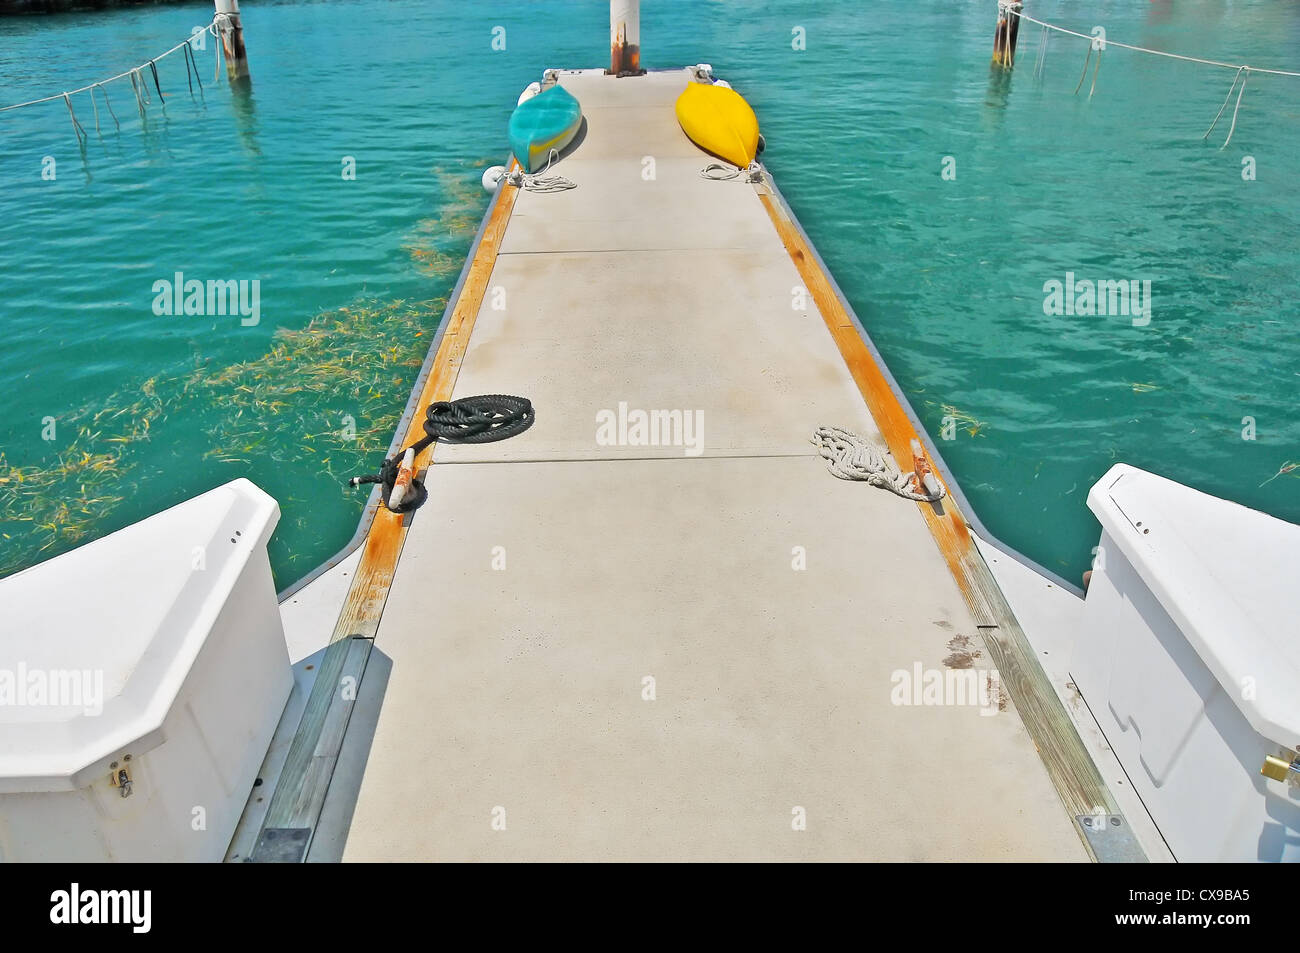 Recreational water sports equipment Stock Photo